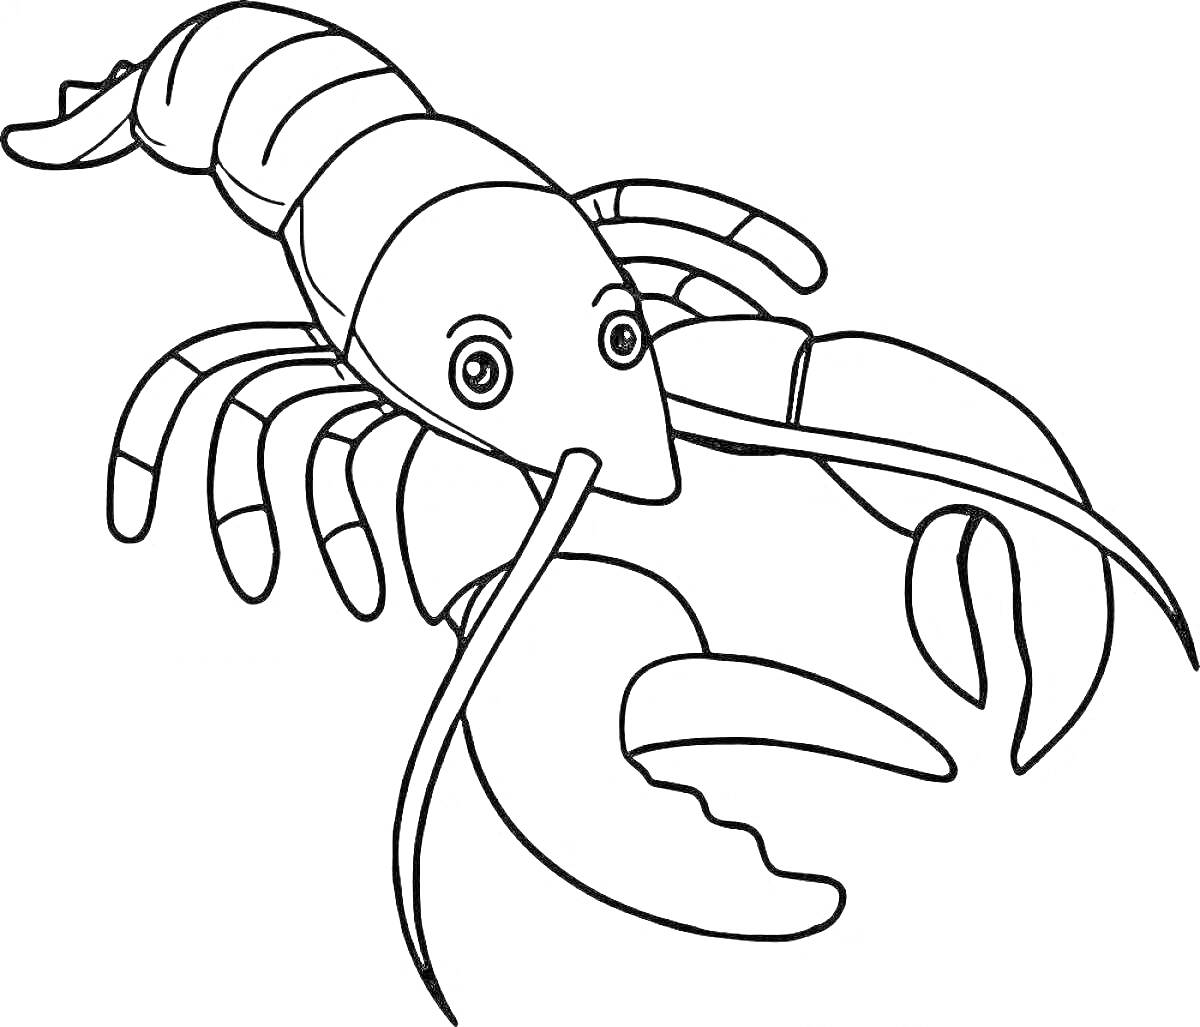 На раскраске изображено: Морское животное, Клешни, Ноги, Глаза, Усики